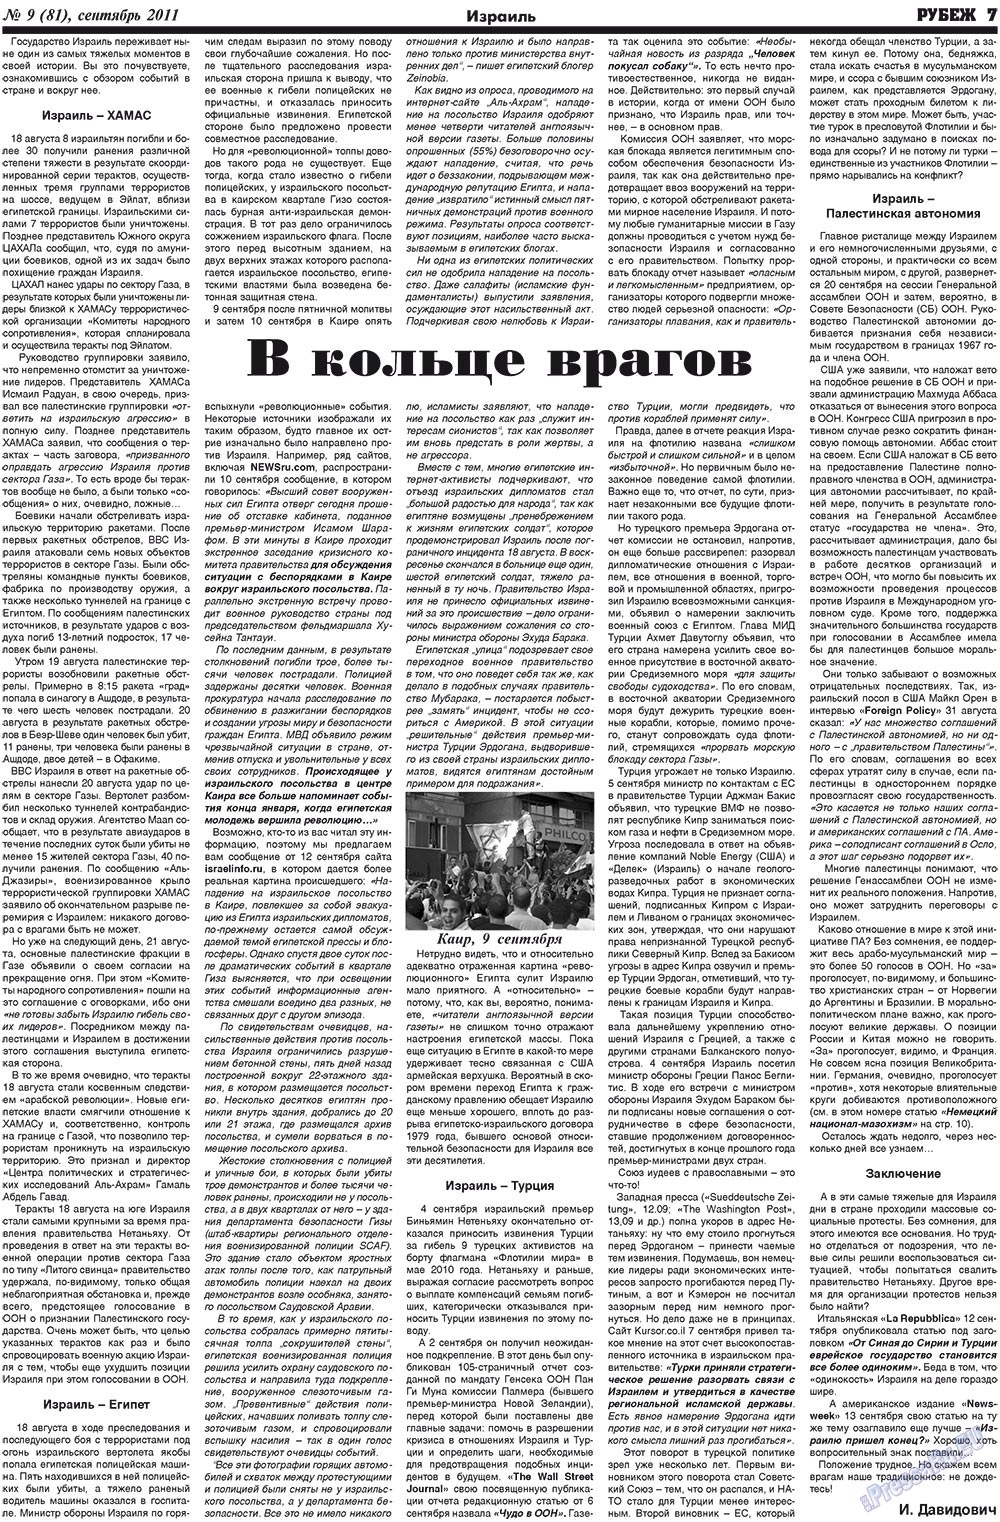 Рубеж, газета. 2011 №9 стр.7